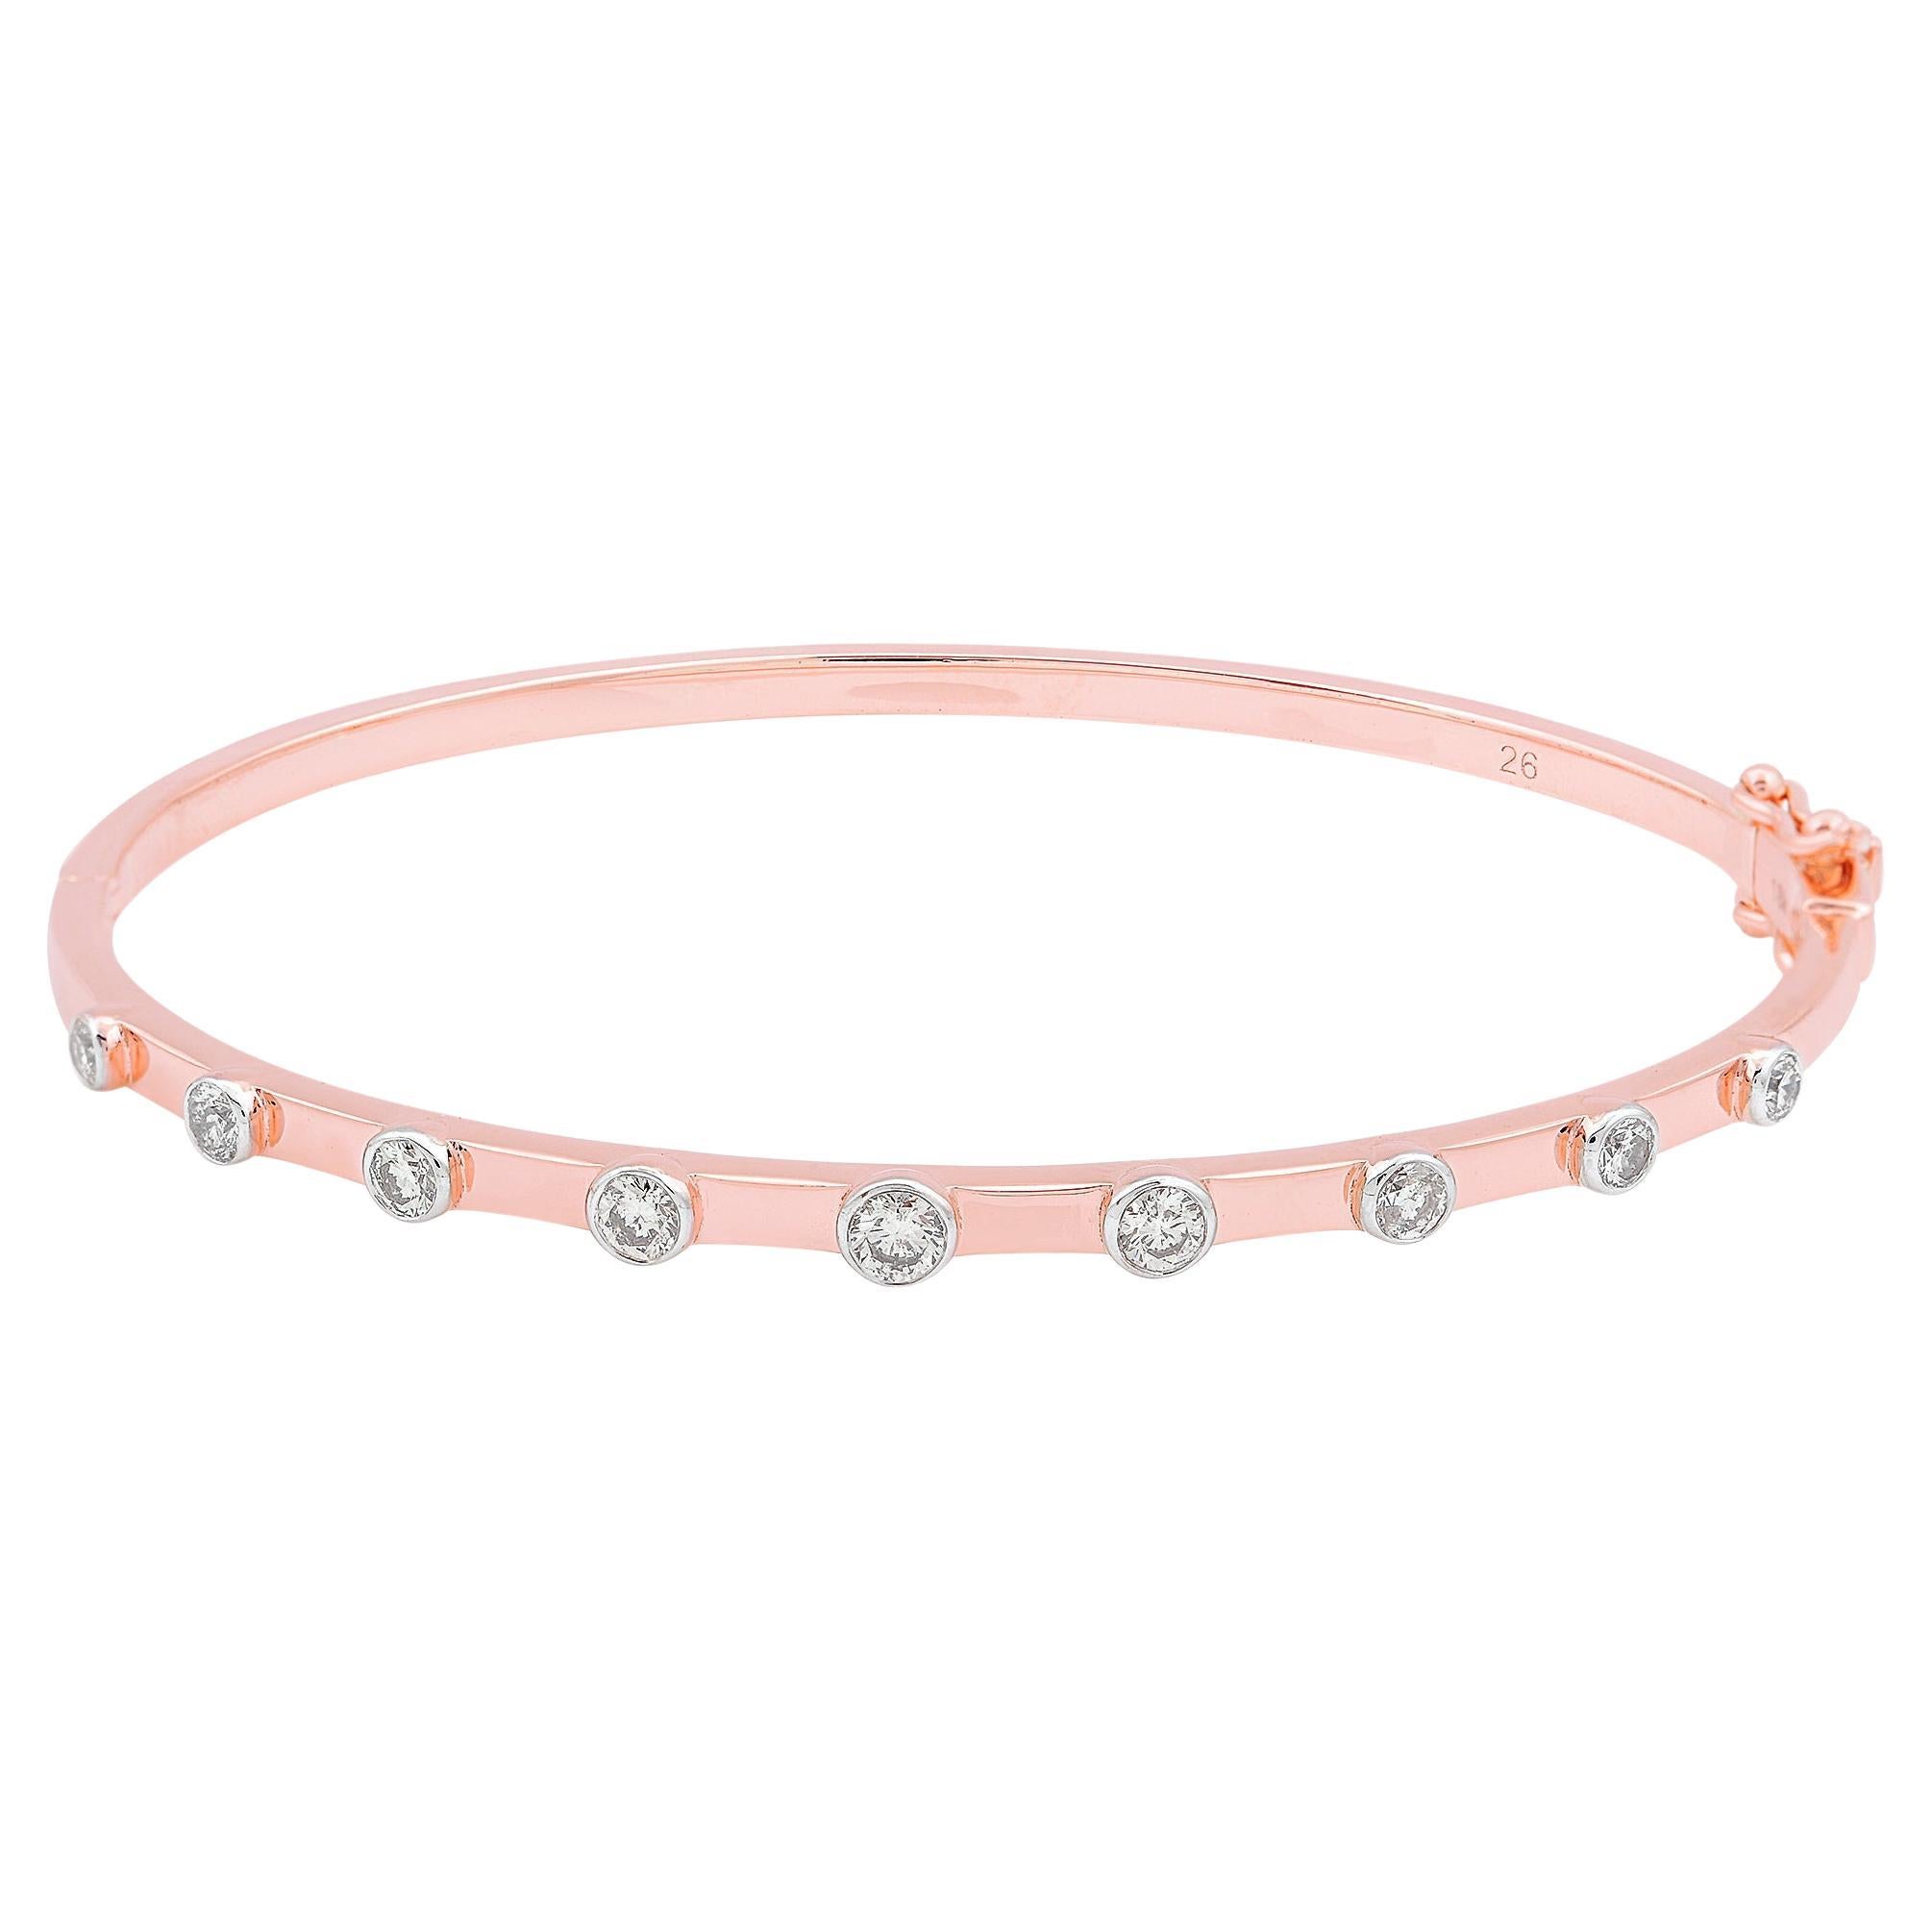 SI Clarity HI Color Round Diamond Bangle Bracelet 18 Karat Rose Gold Jewelry